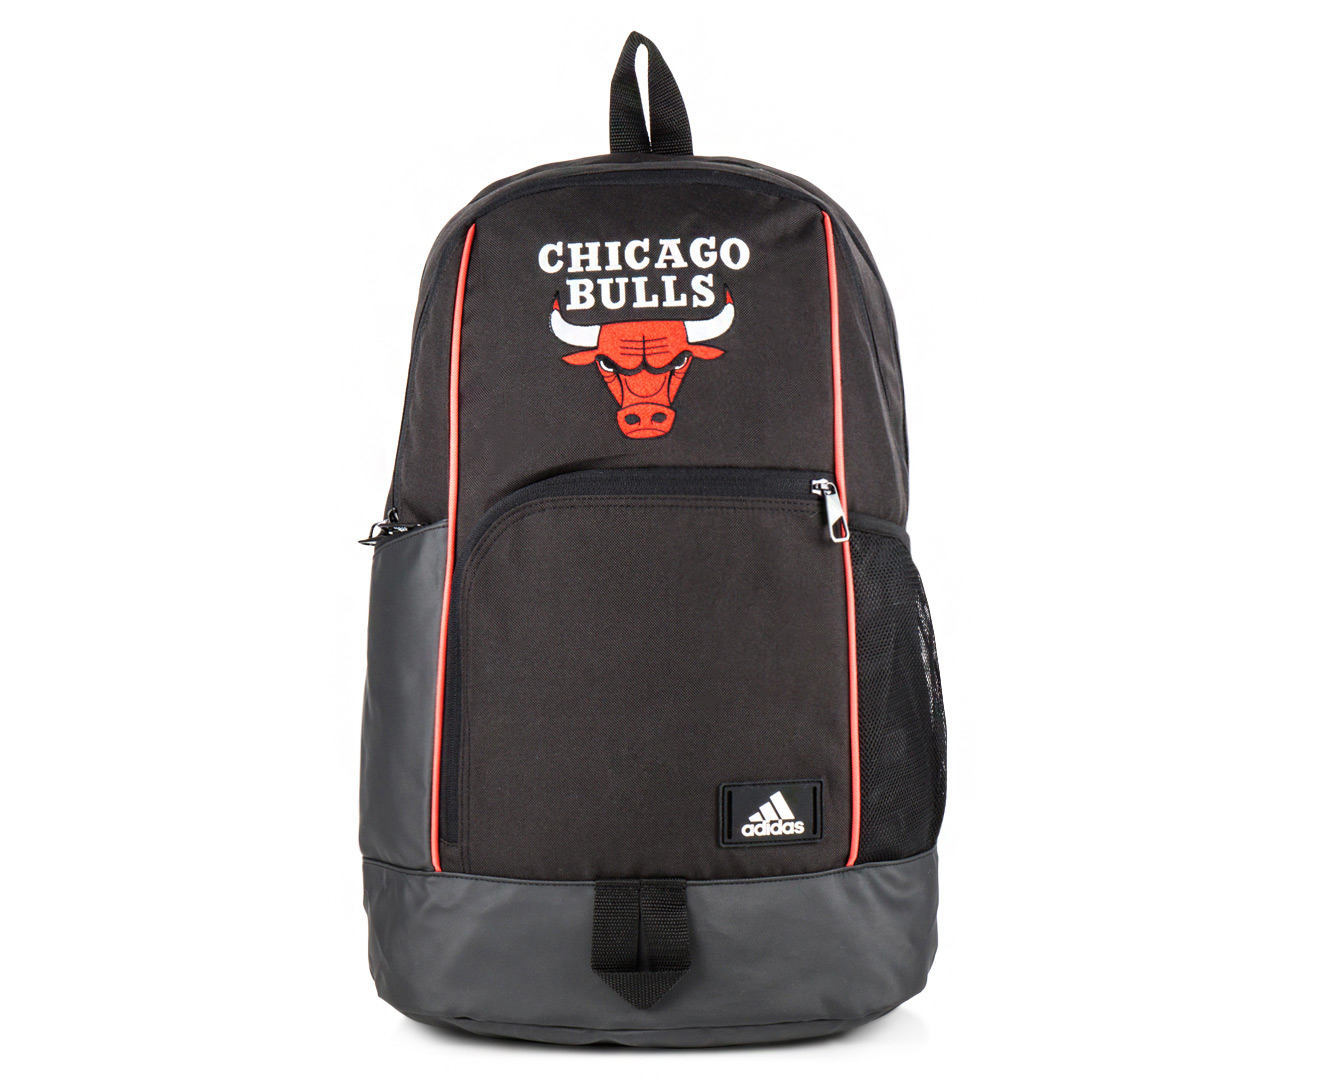 Adidas Chicago Bulls Backpack - Black 